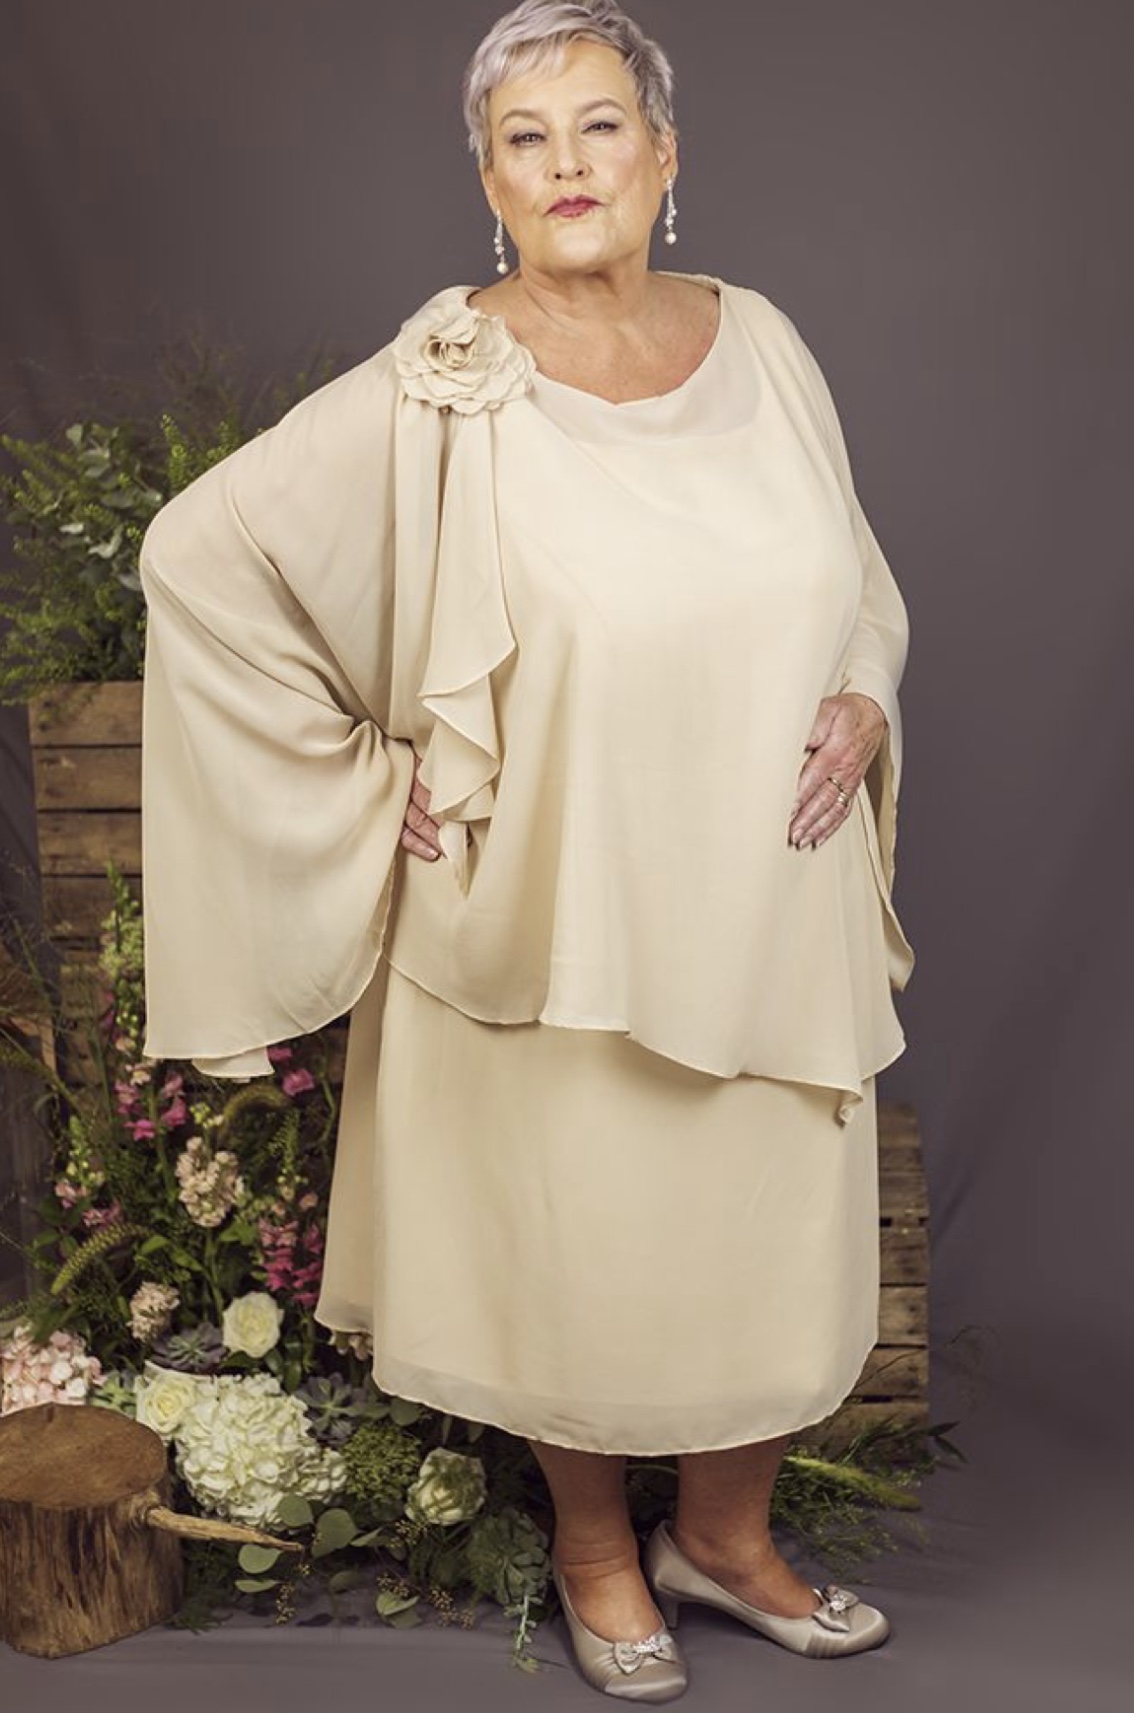 Amazon Grandmother Of The Bride Dresses